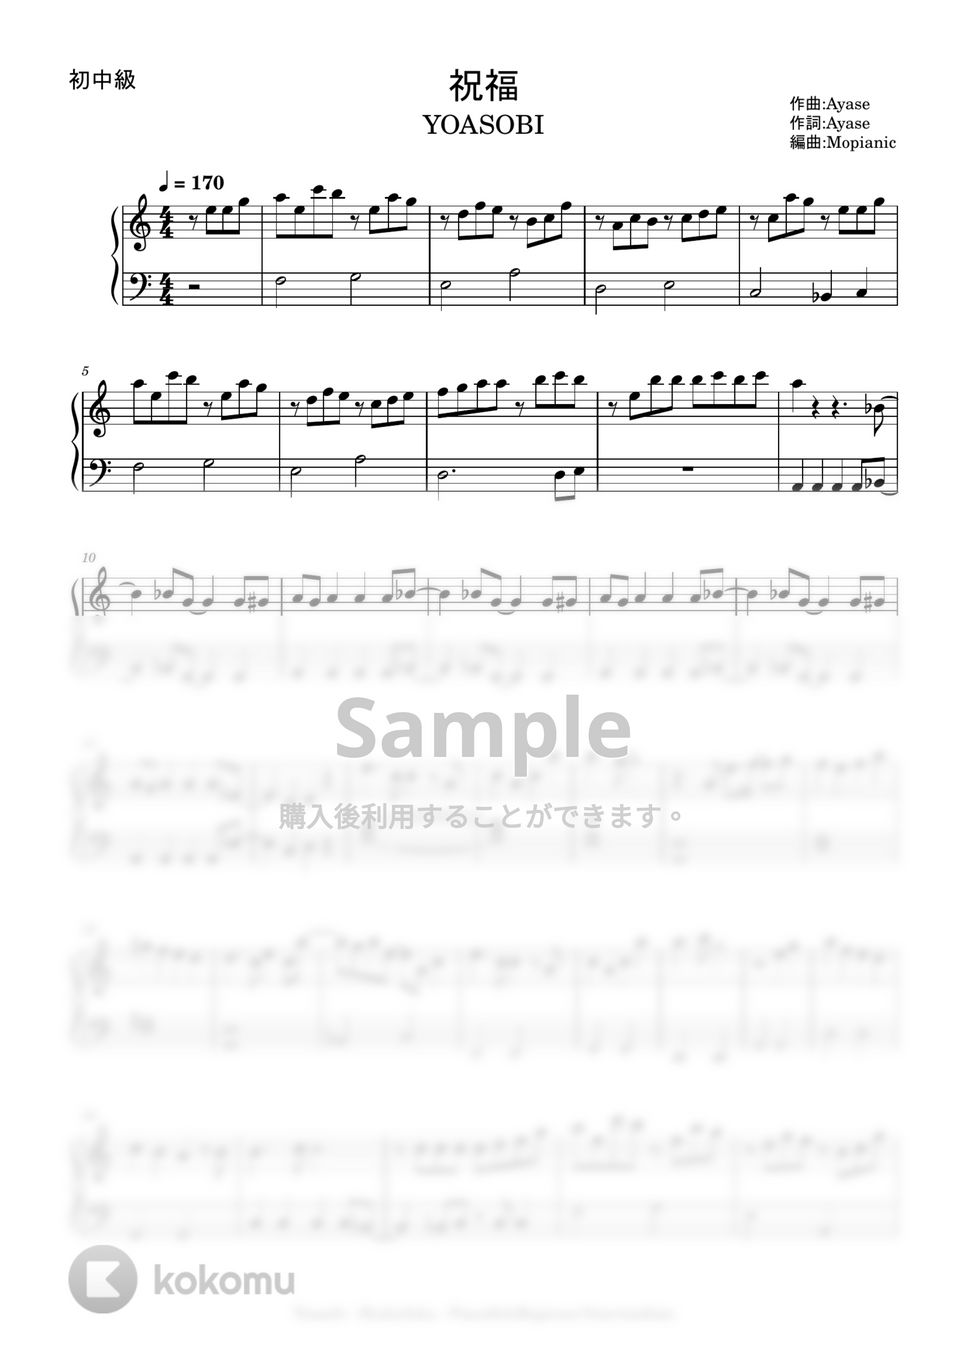 YOASOBI - Shukufuku (beginner to intermediate, piano) by Mopianic